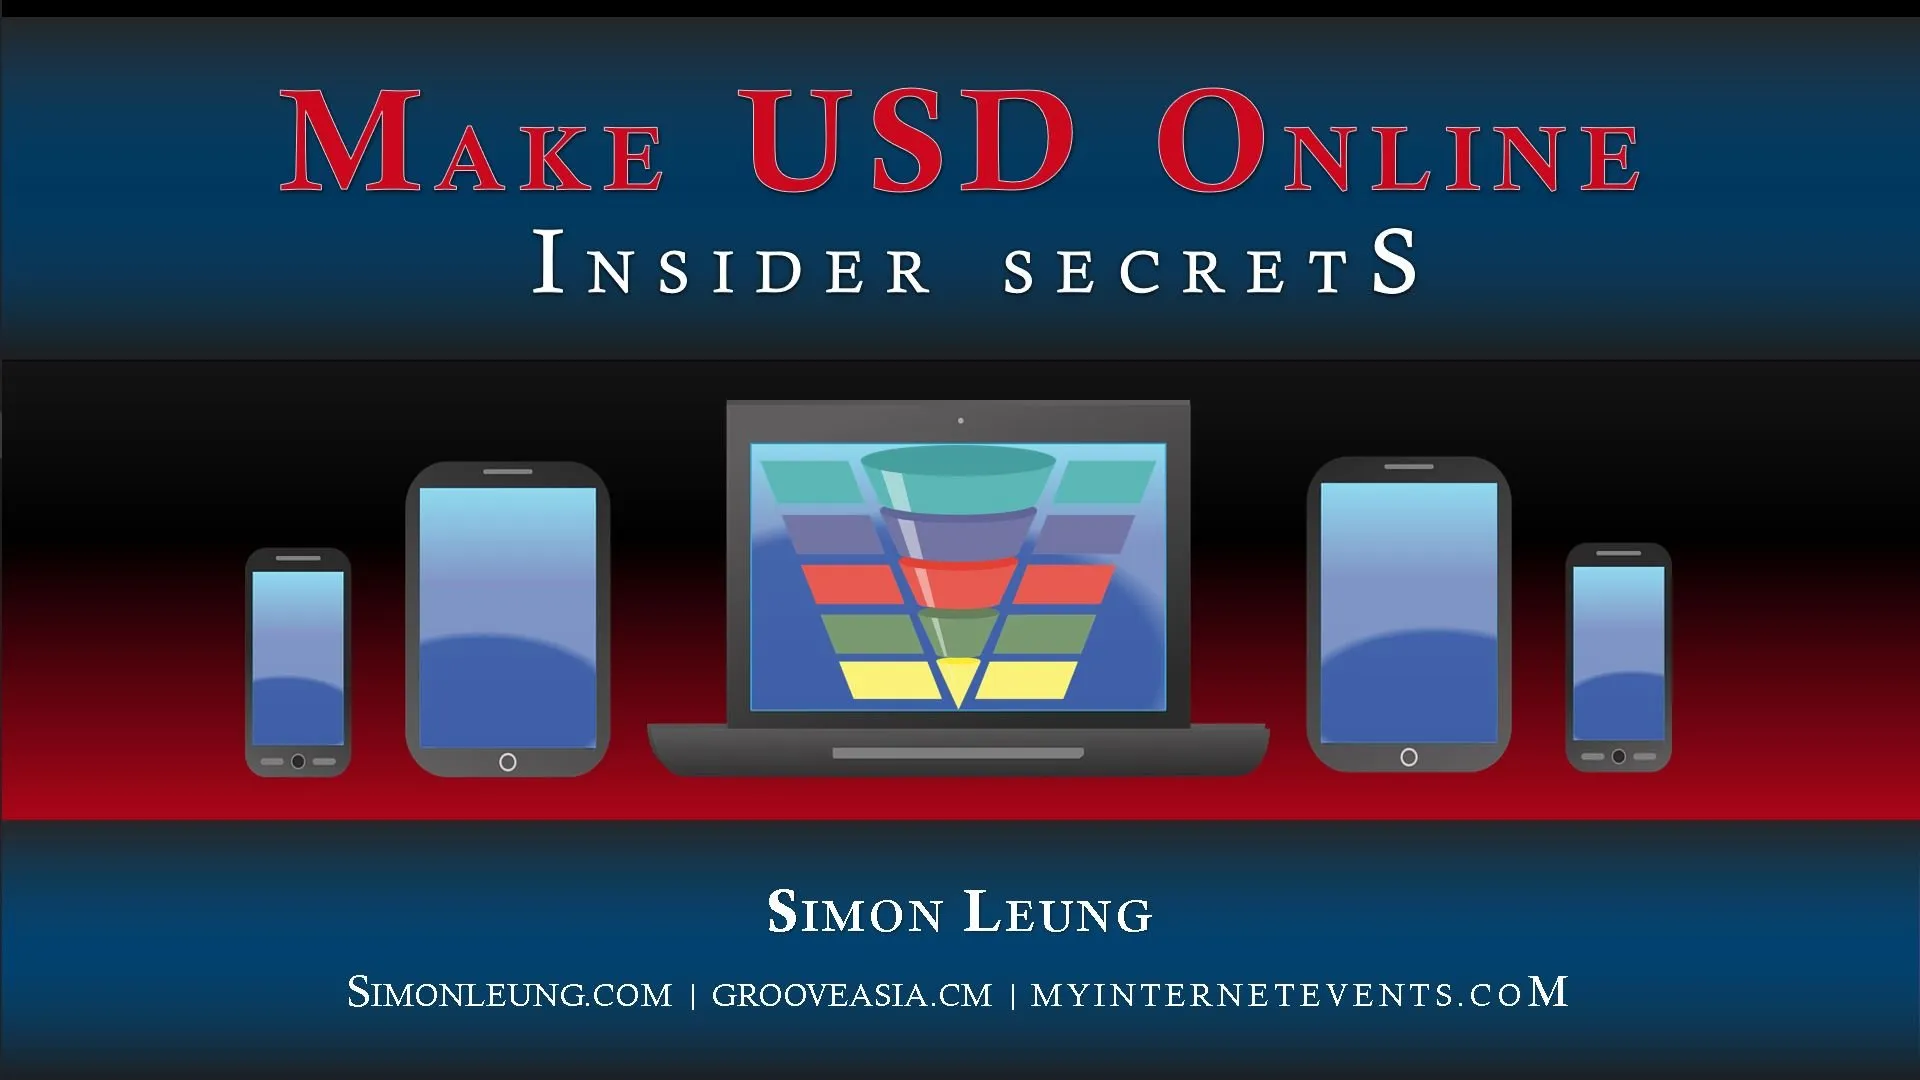 make usd online insider secrets simon leung